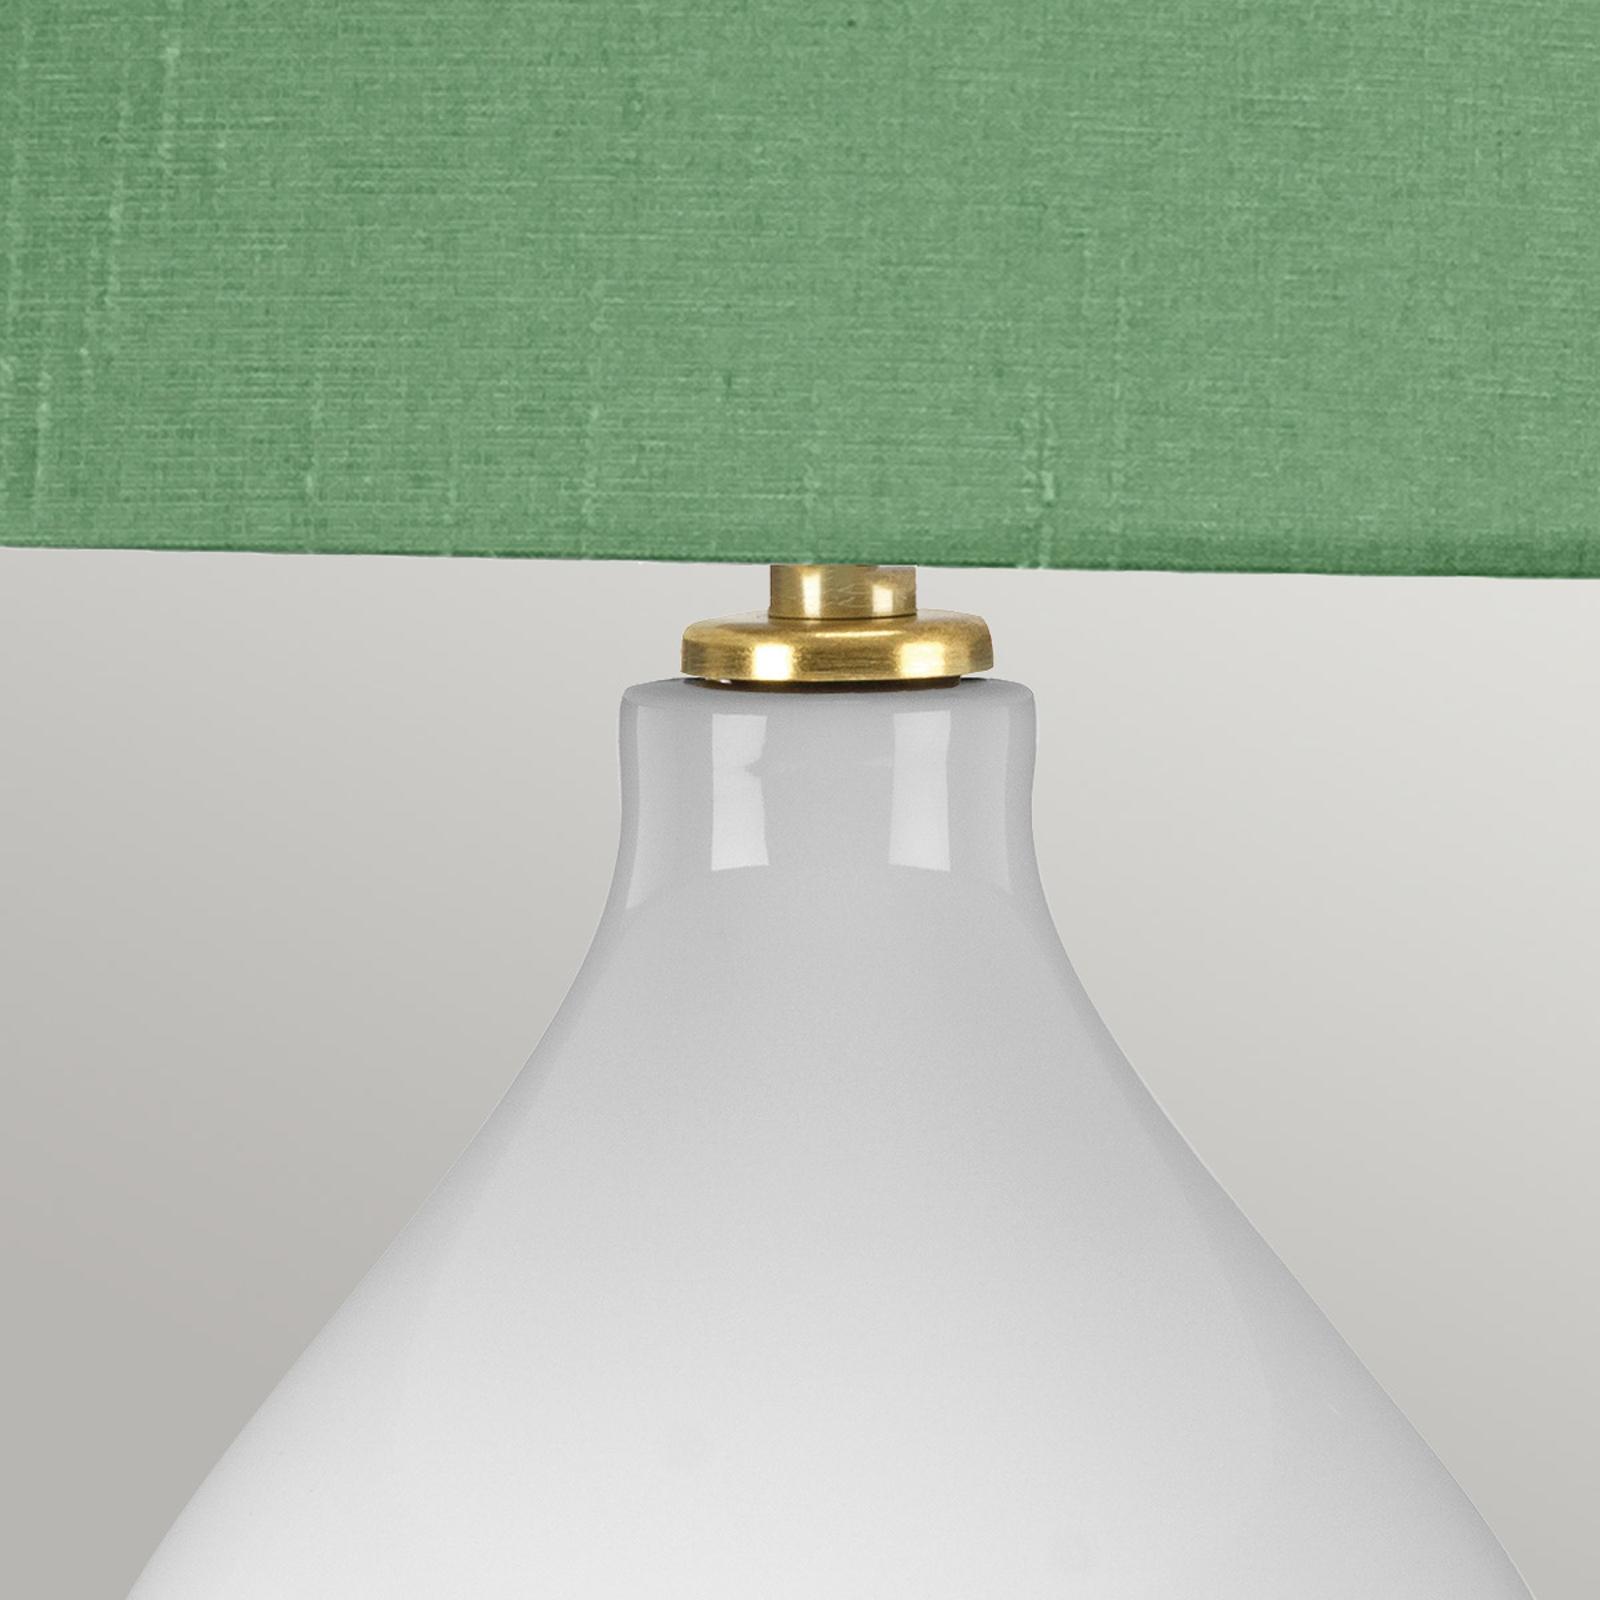 Isla fabric table lamp antique brass/green